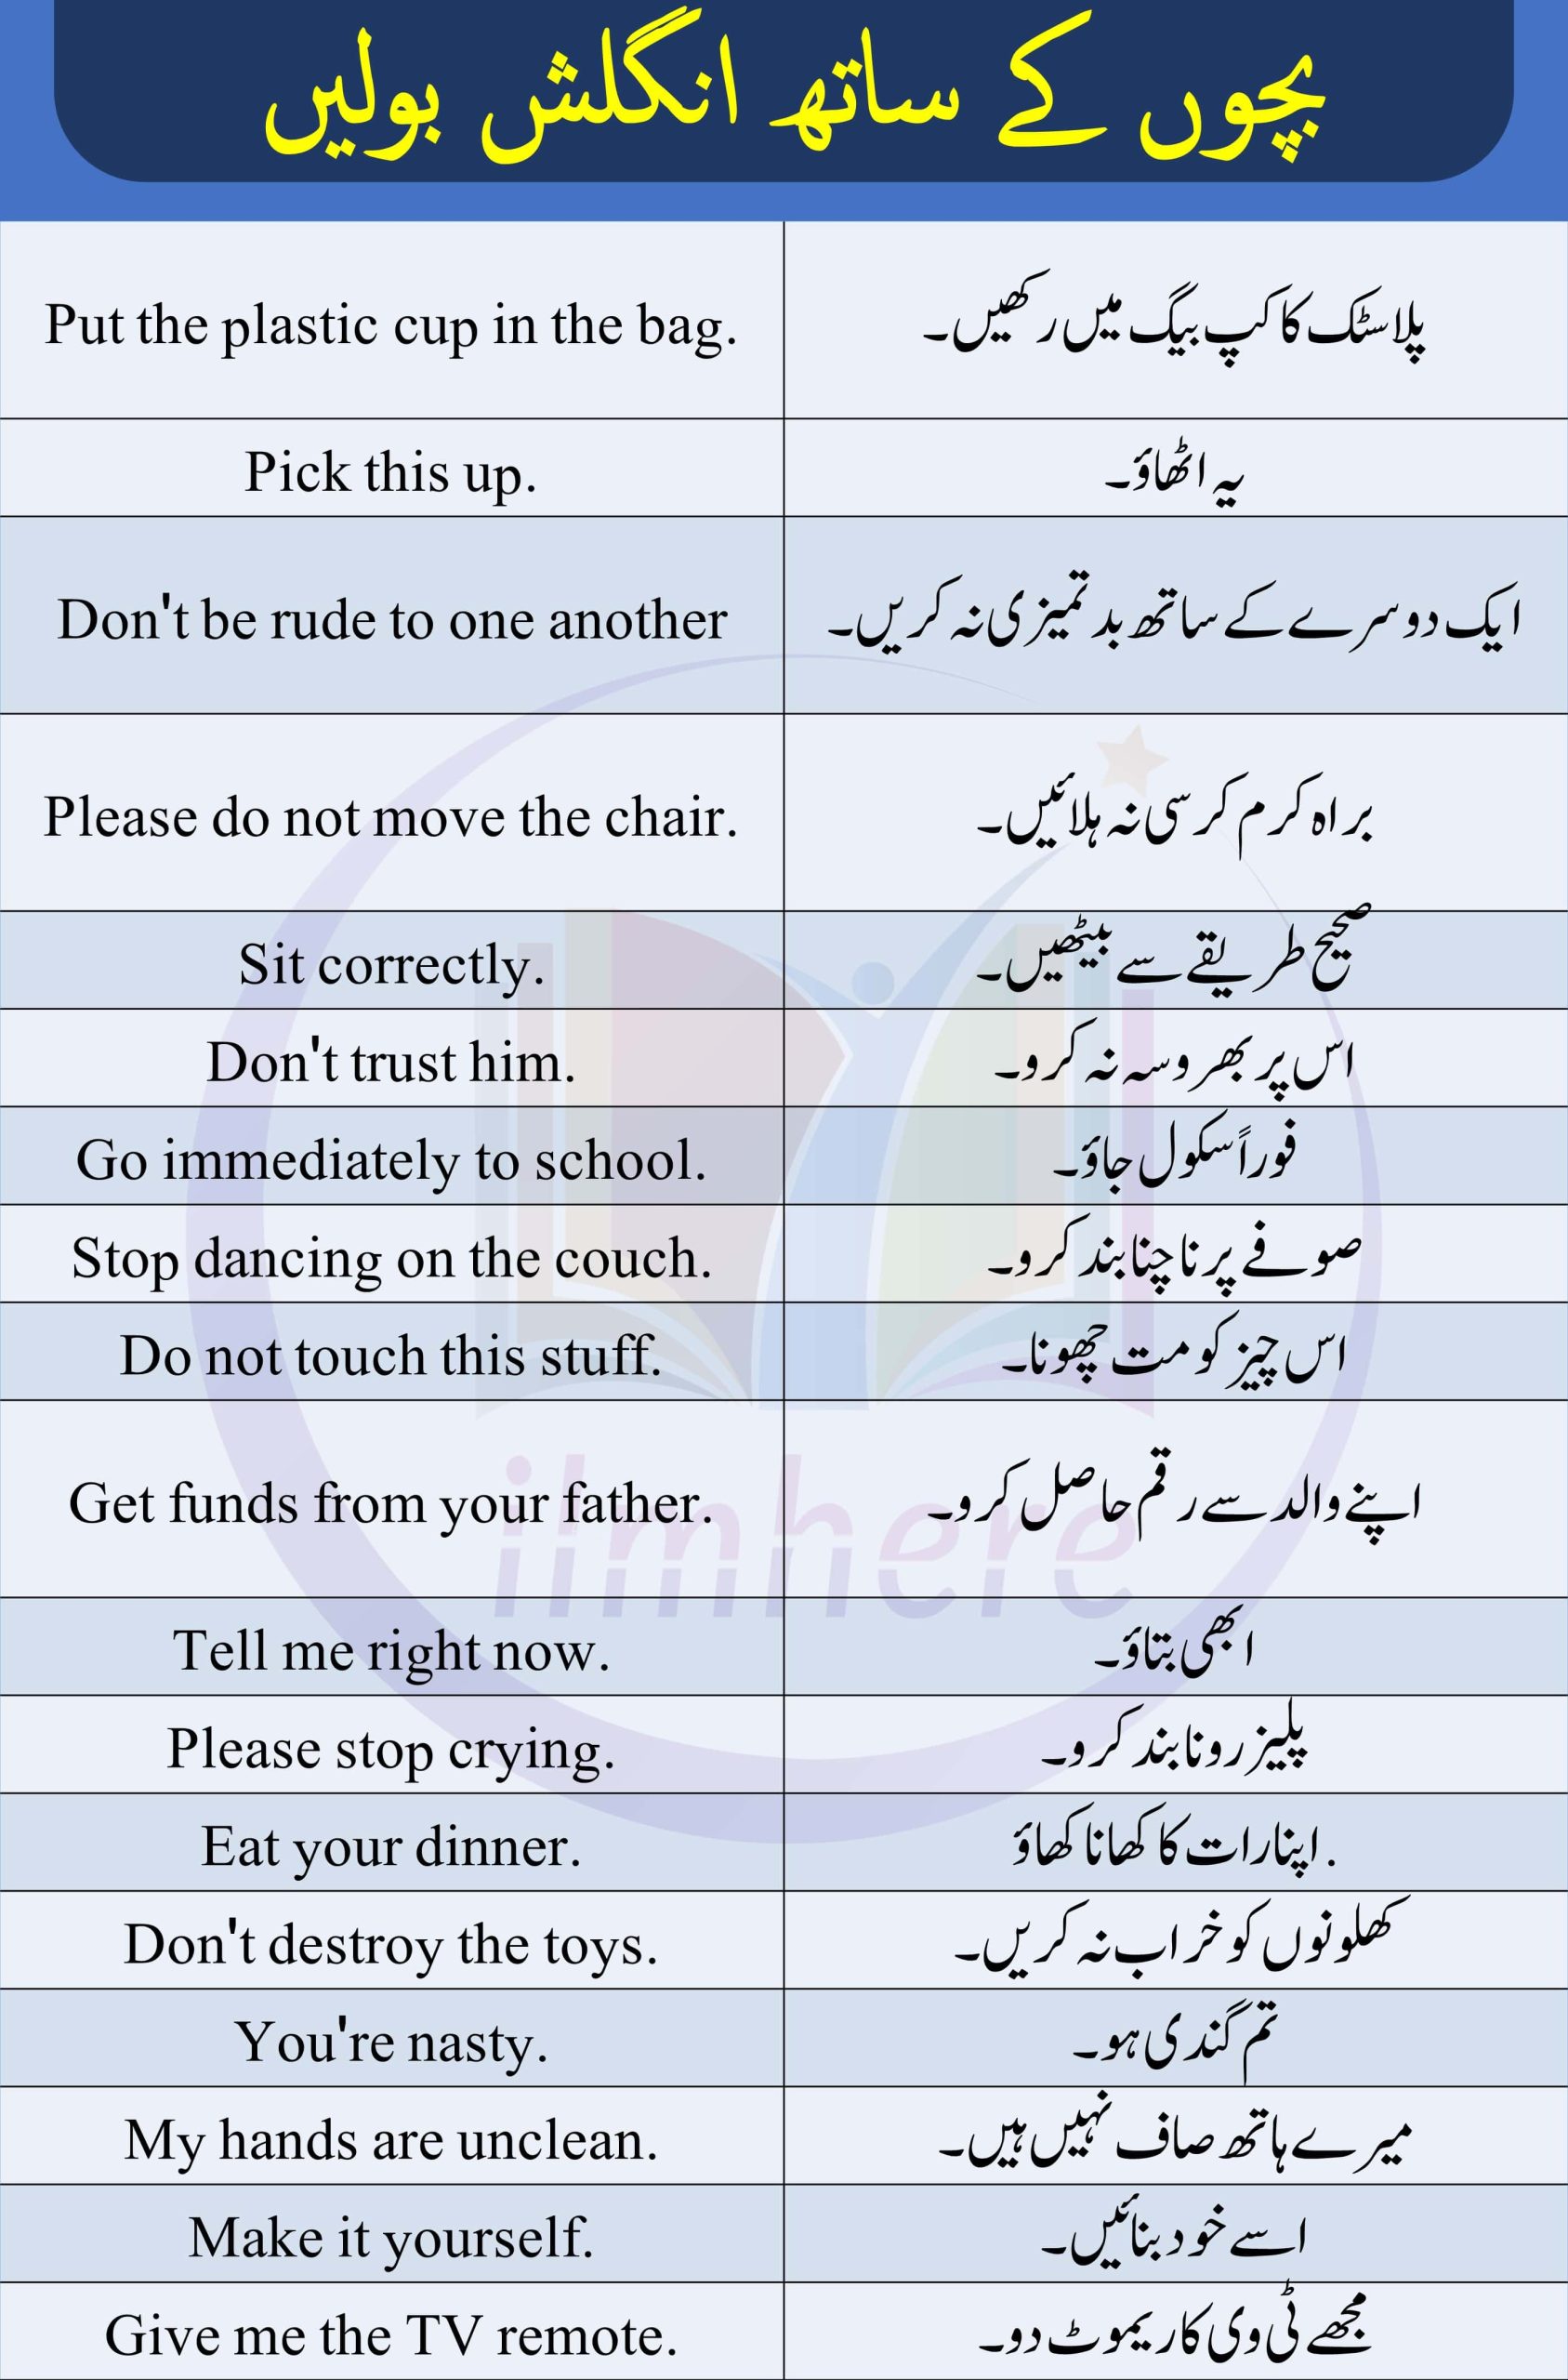 English Sentences for Parents To Speak with Children in Urdu